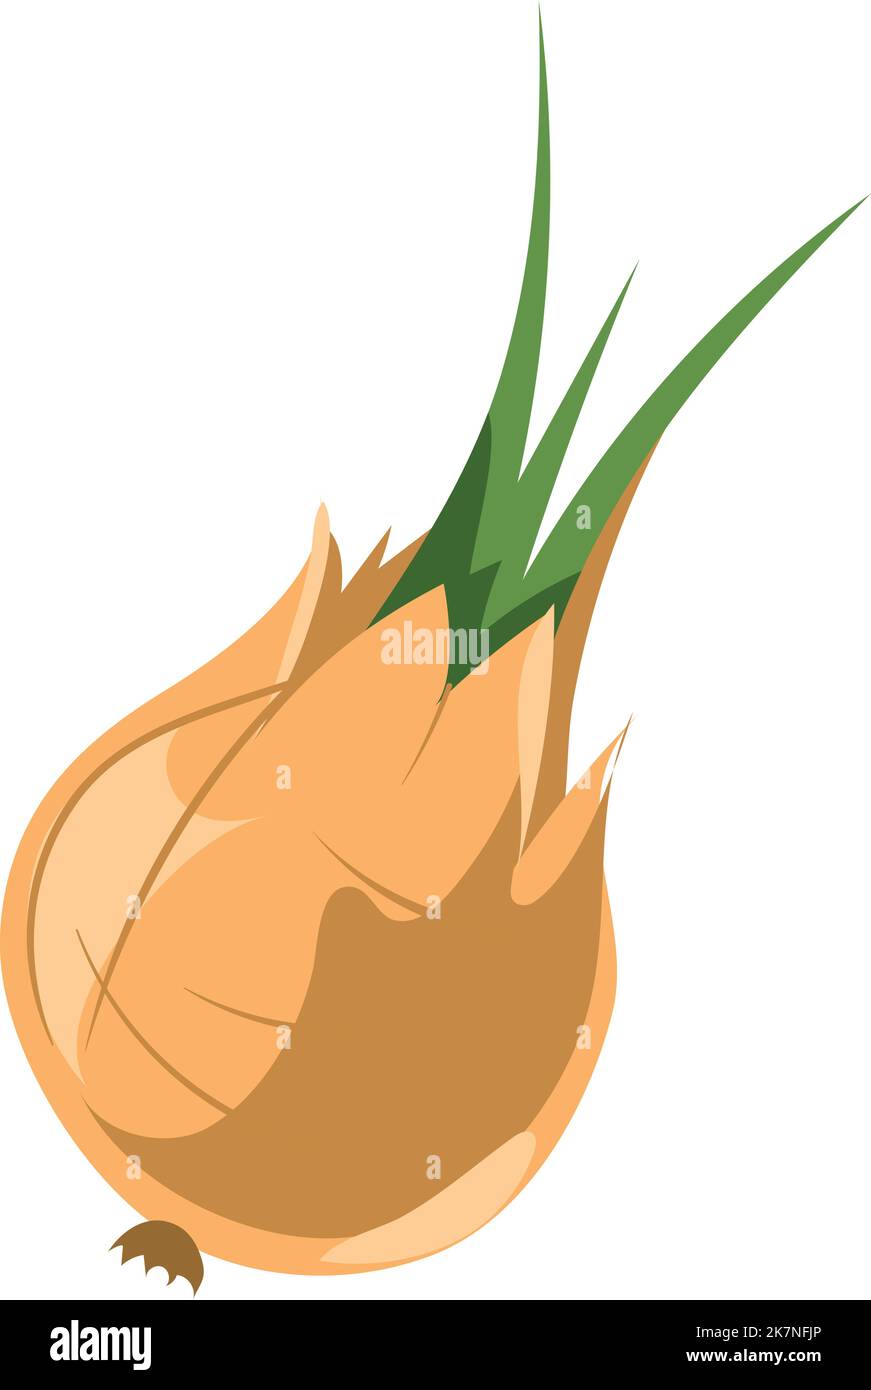 Onion bulb icon. Cartoon vegetable. Raw root Stock Vector